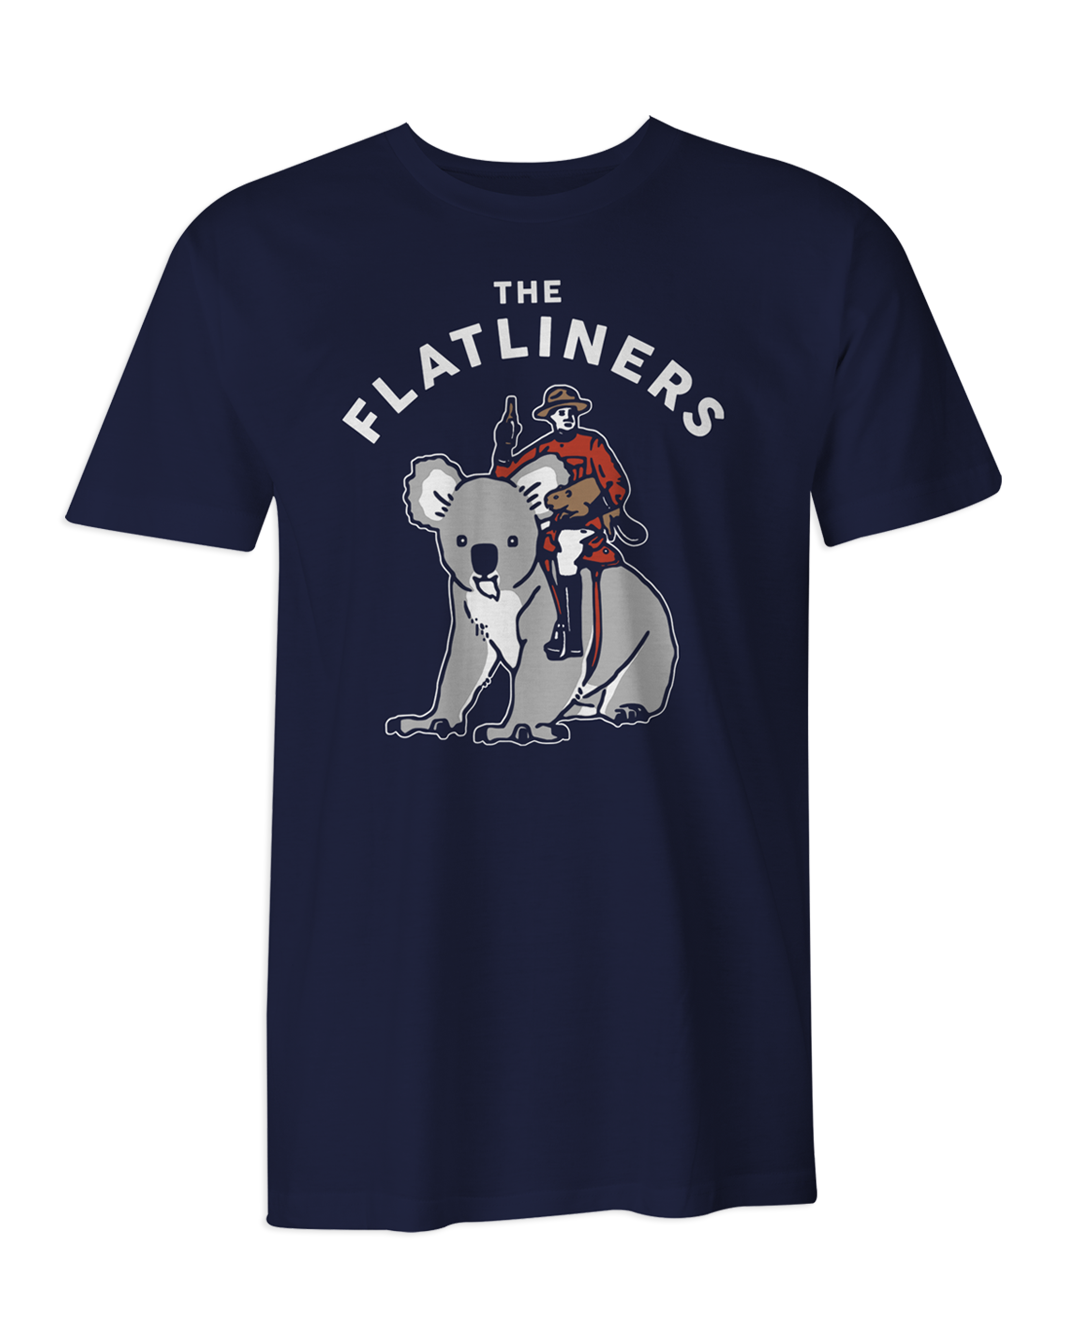 The Flatliners Mountie T-Shirt